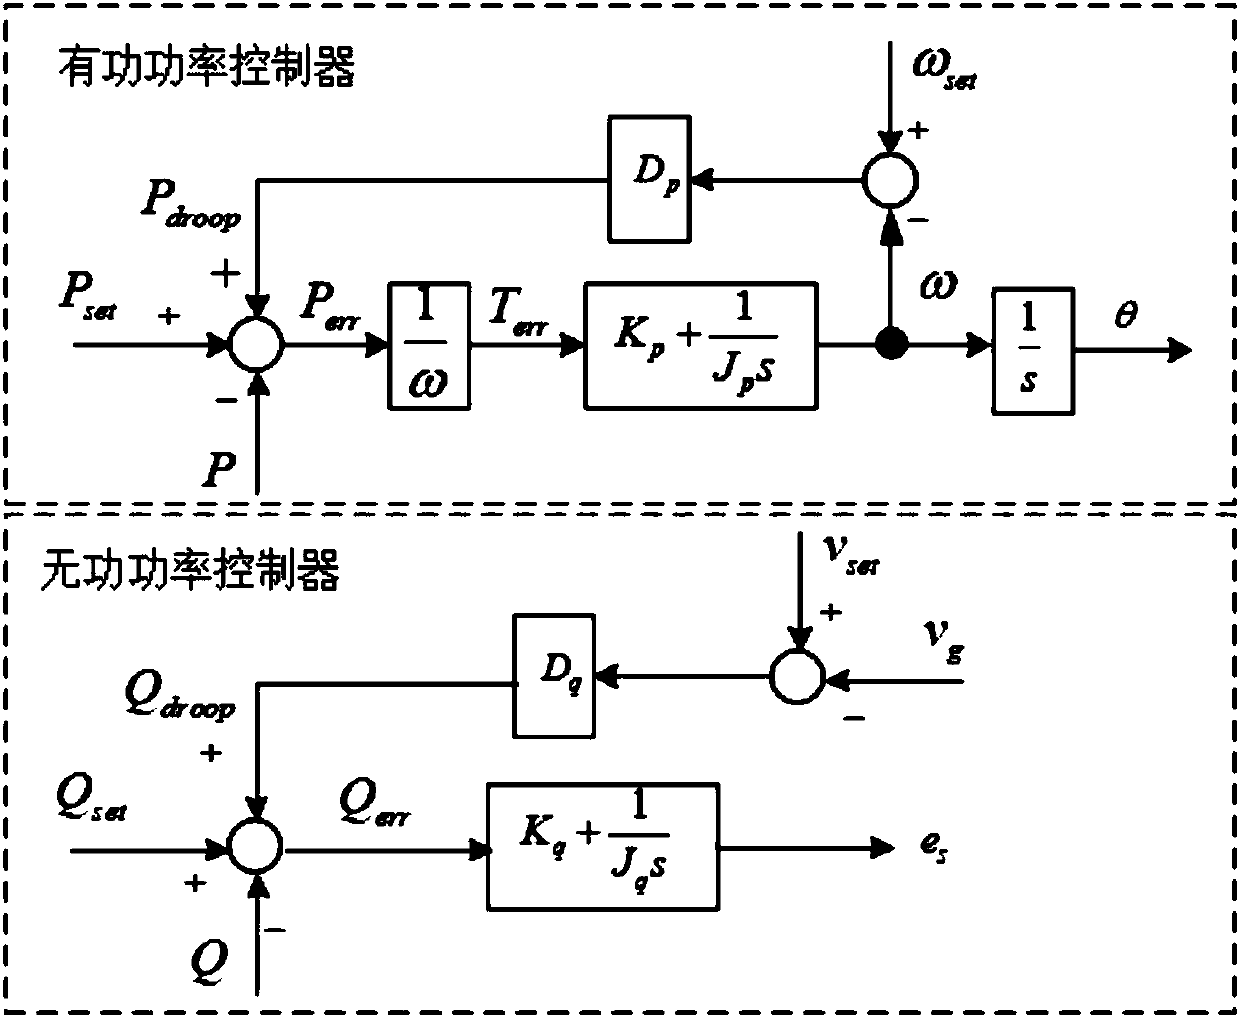 Control method of quasi-virtual synchronous machine